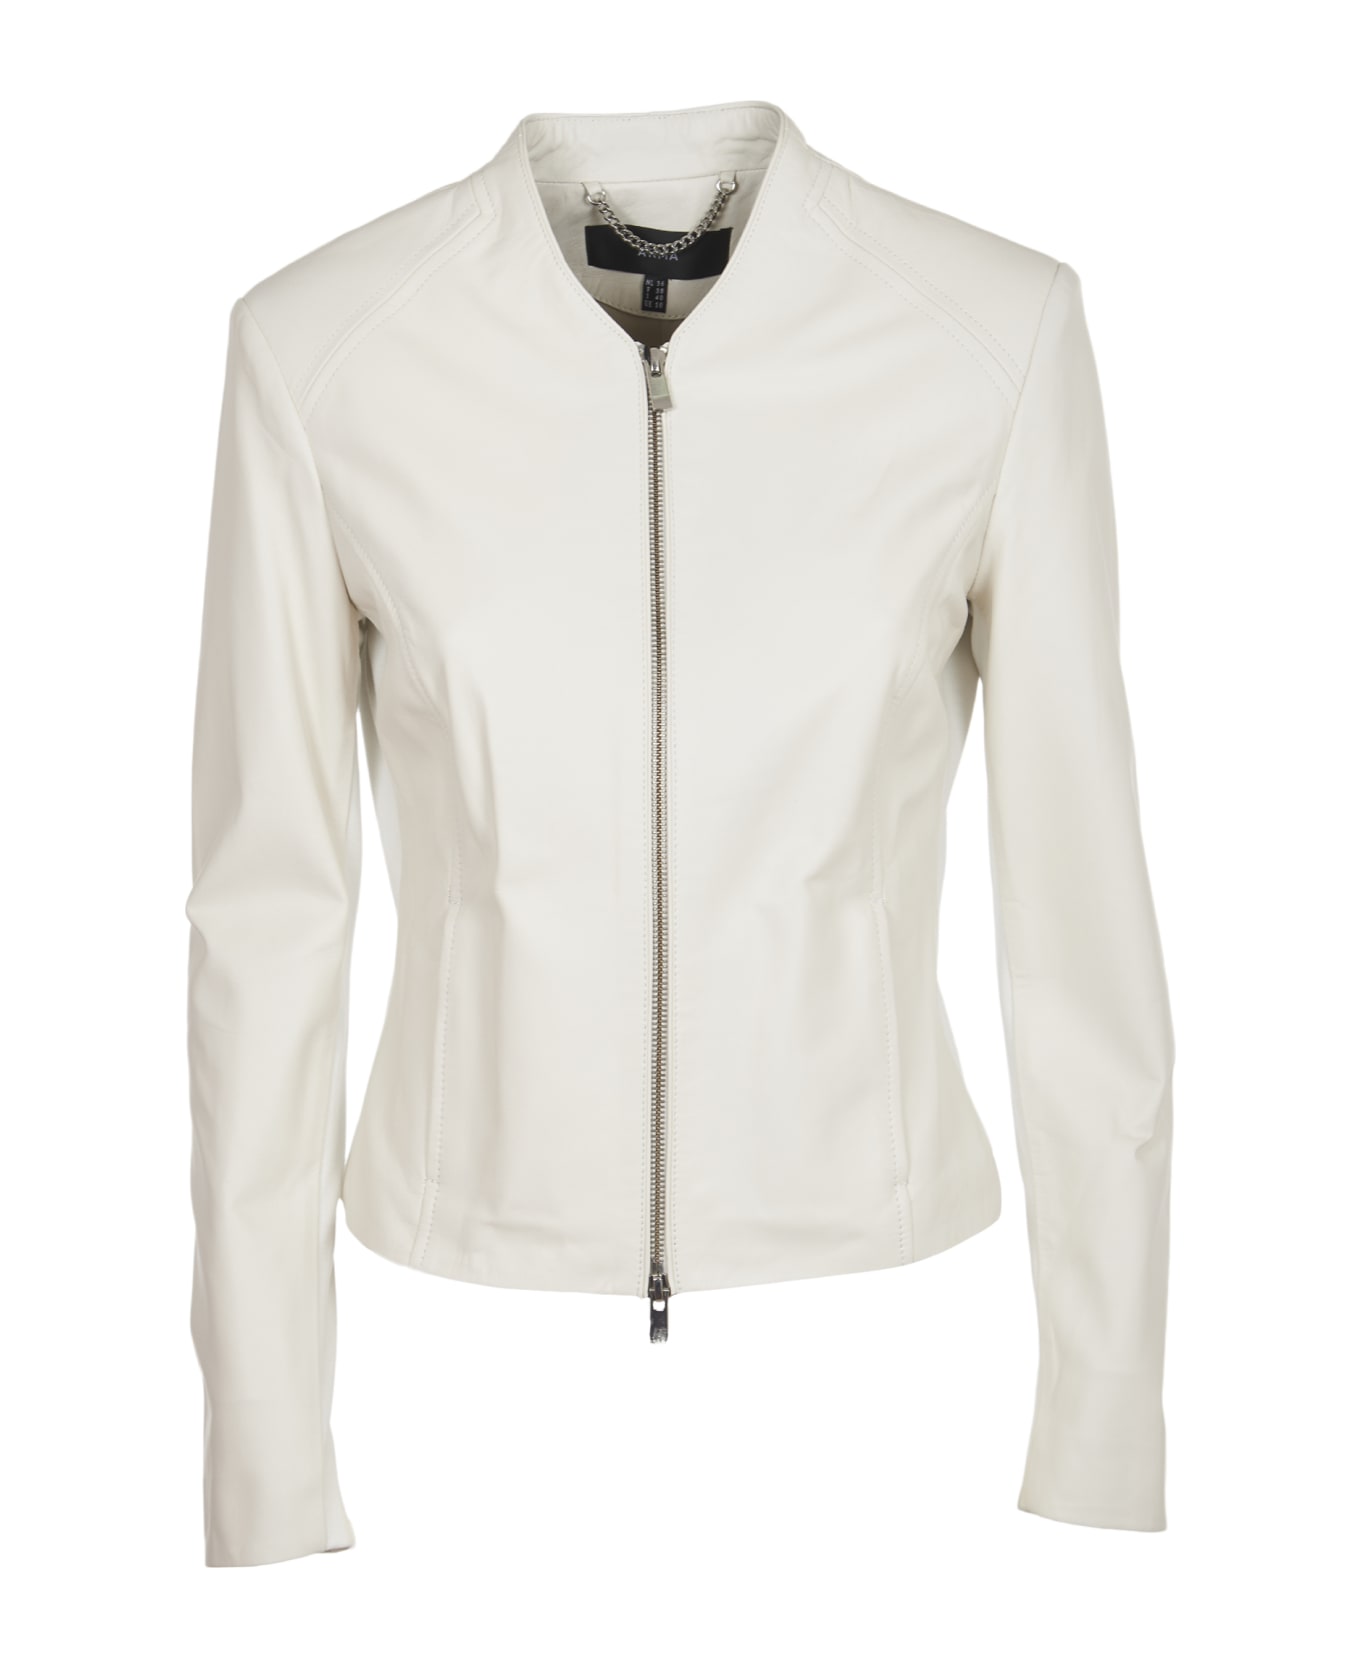 ARMA White Leather Jacket | italist